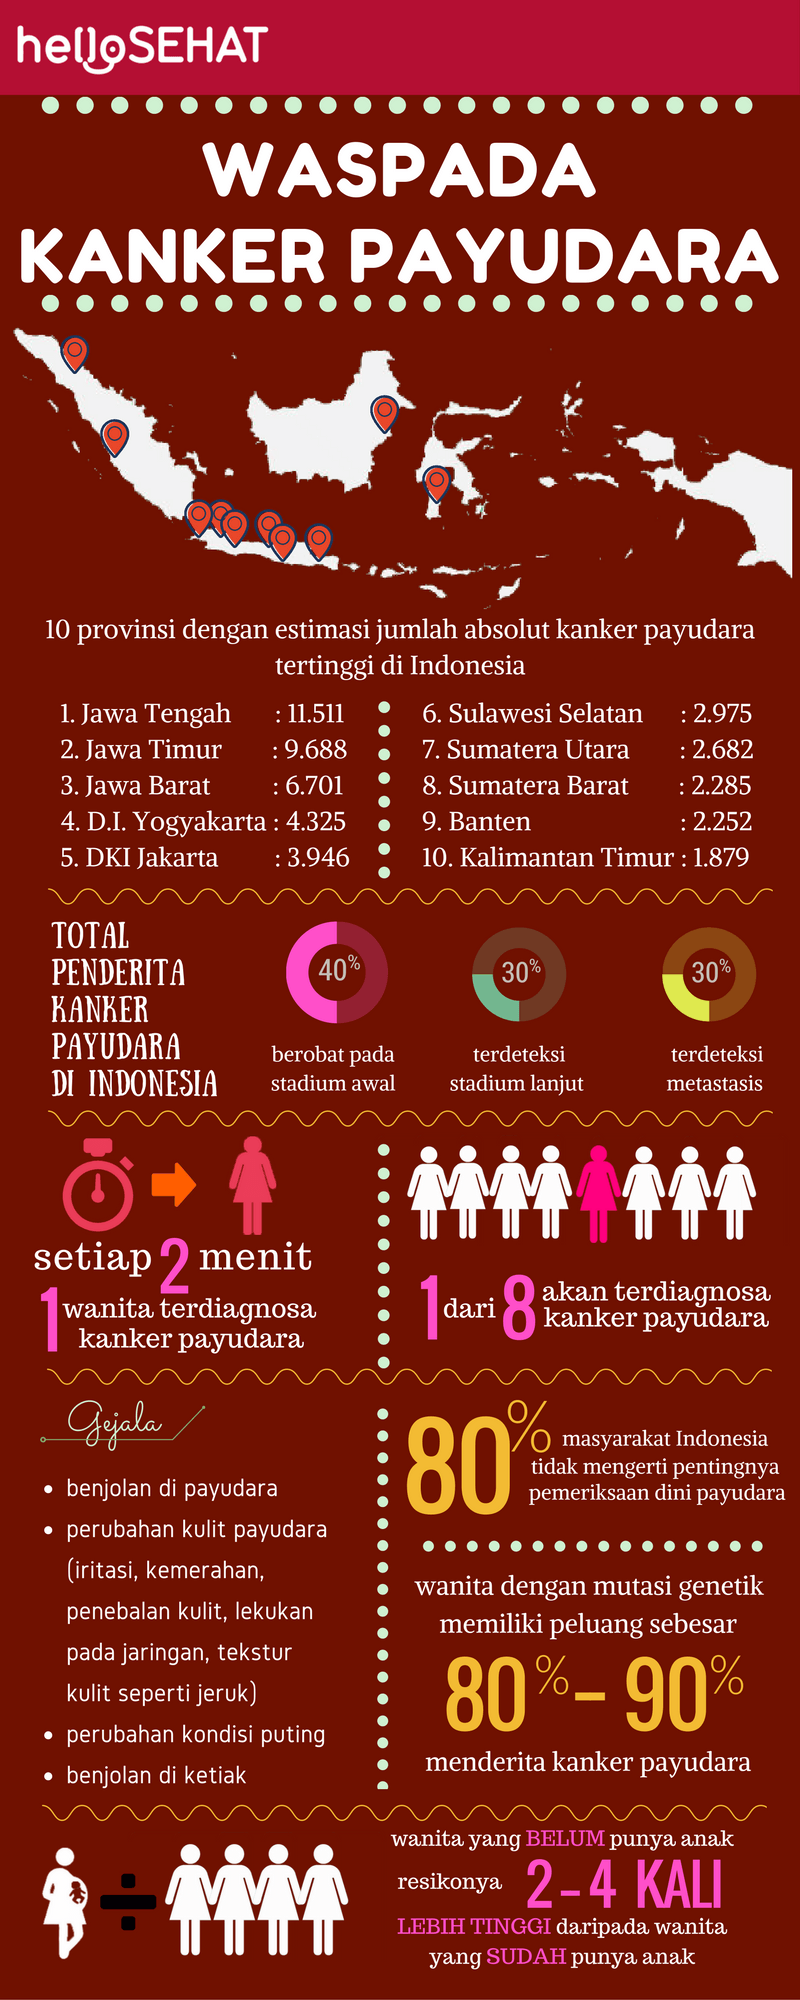 Zdravo zdravo rak dojke infographic v Indoneziji